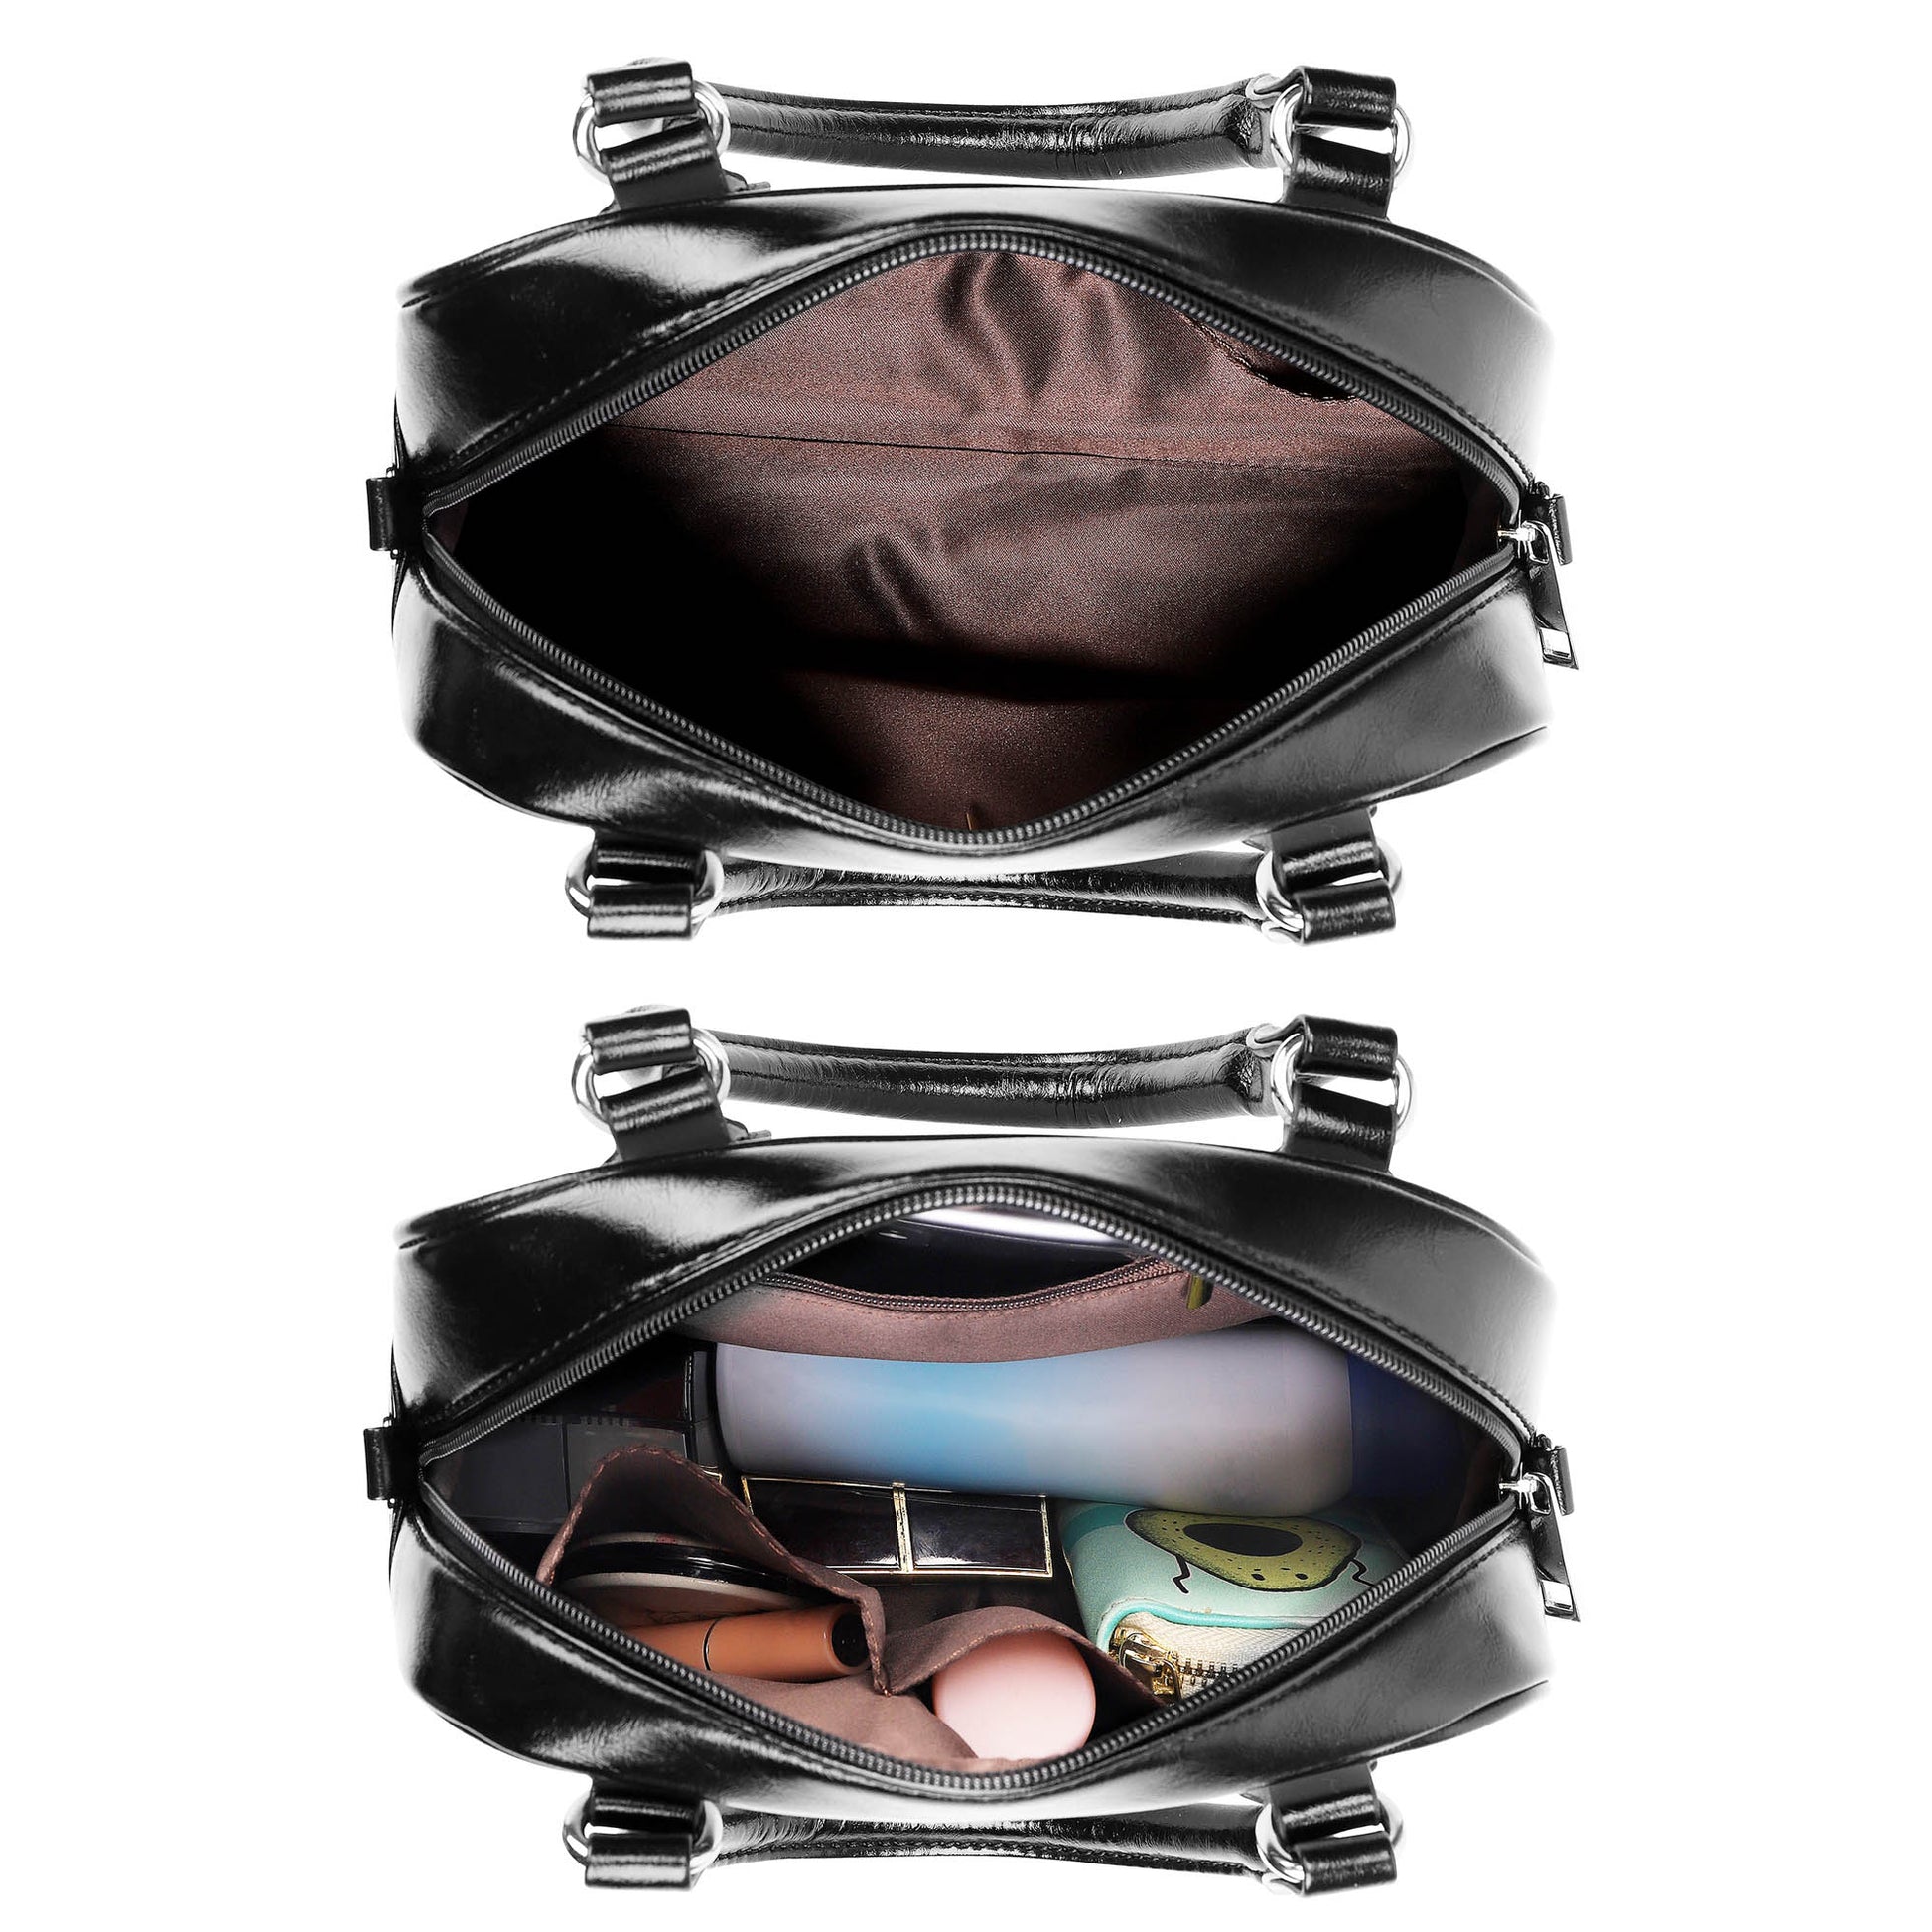 MacDougall Tartan Shoulder Handbags with Family Crest - Tartanvibesclothing